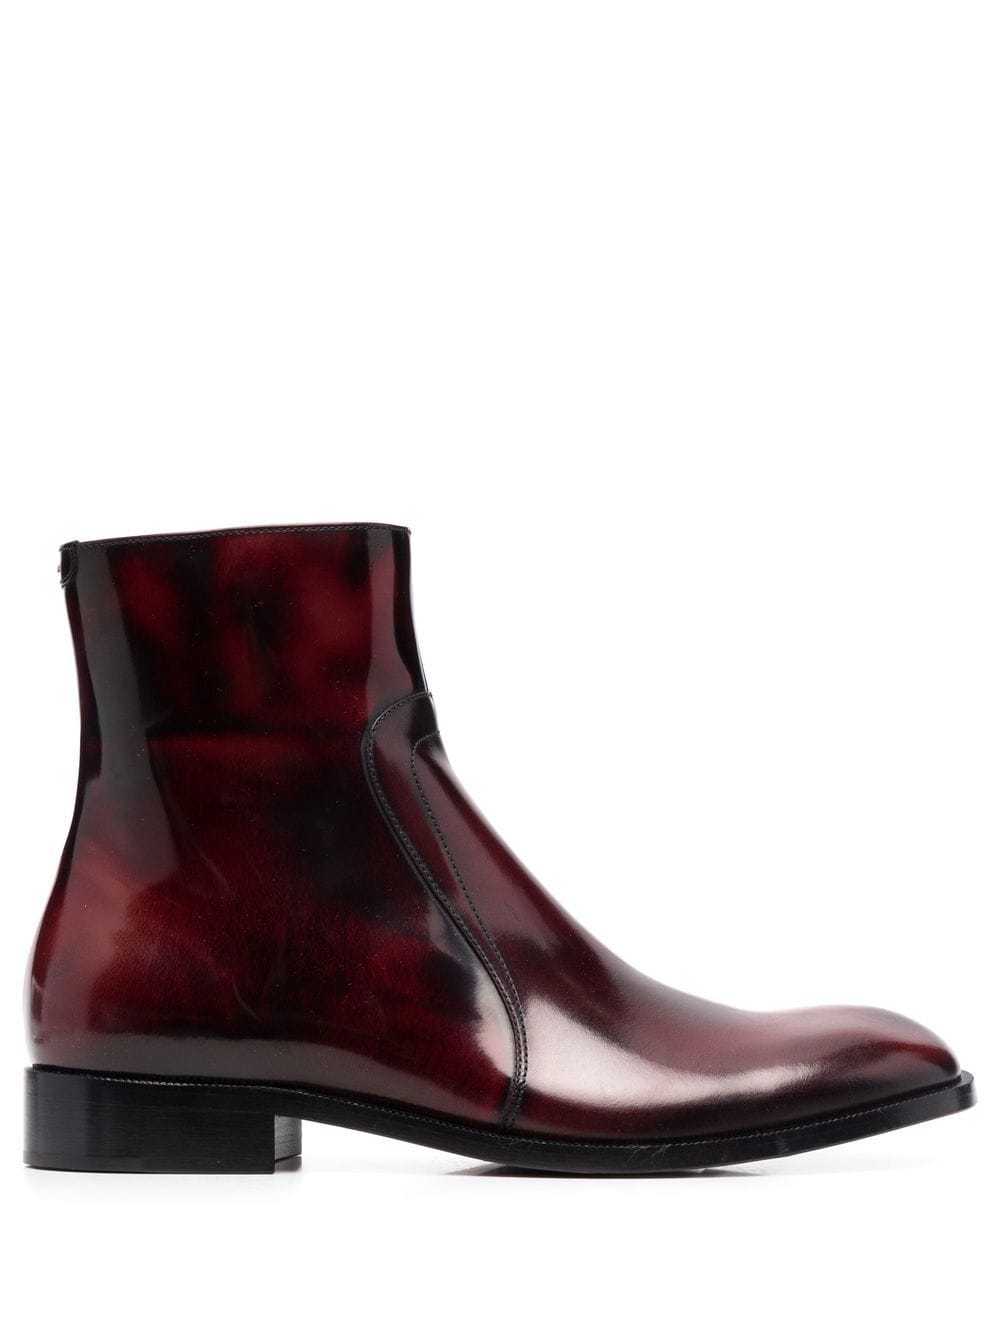 Maison Margiela waxed leather ankle boots - Red von Maison Margiela